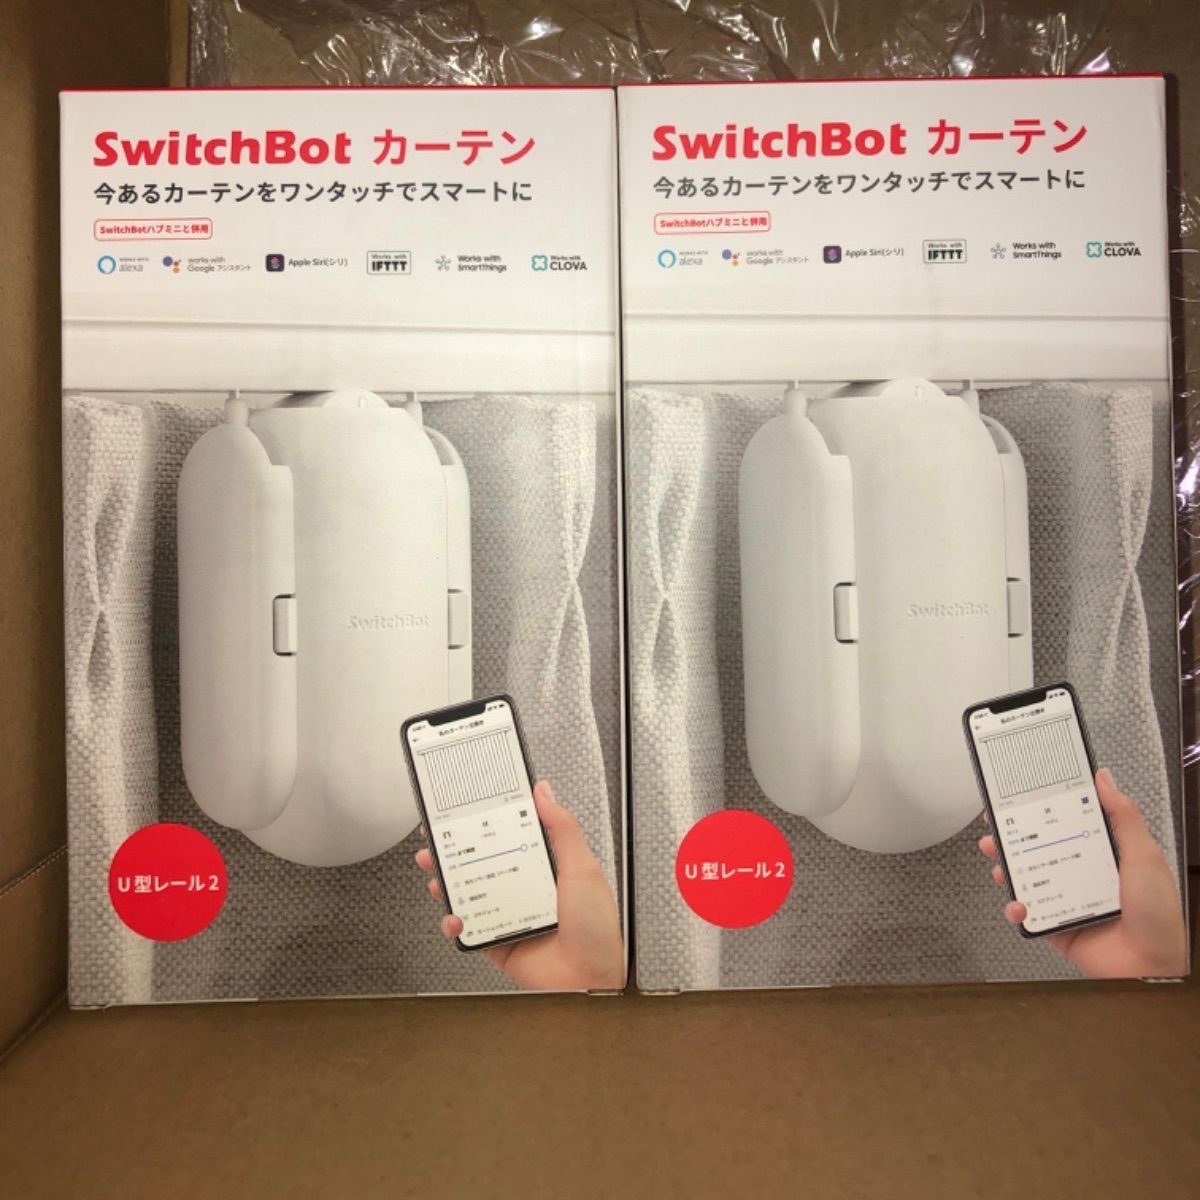 SwitchBot カーテン スイッチボット U型レール2 2点セット - メルカリ